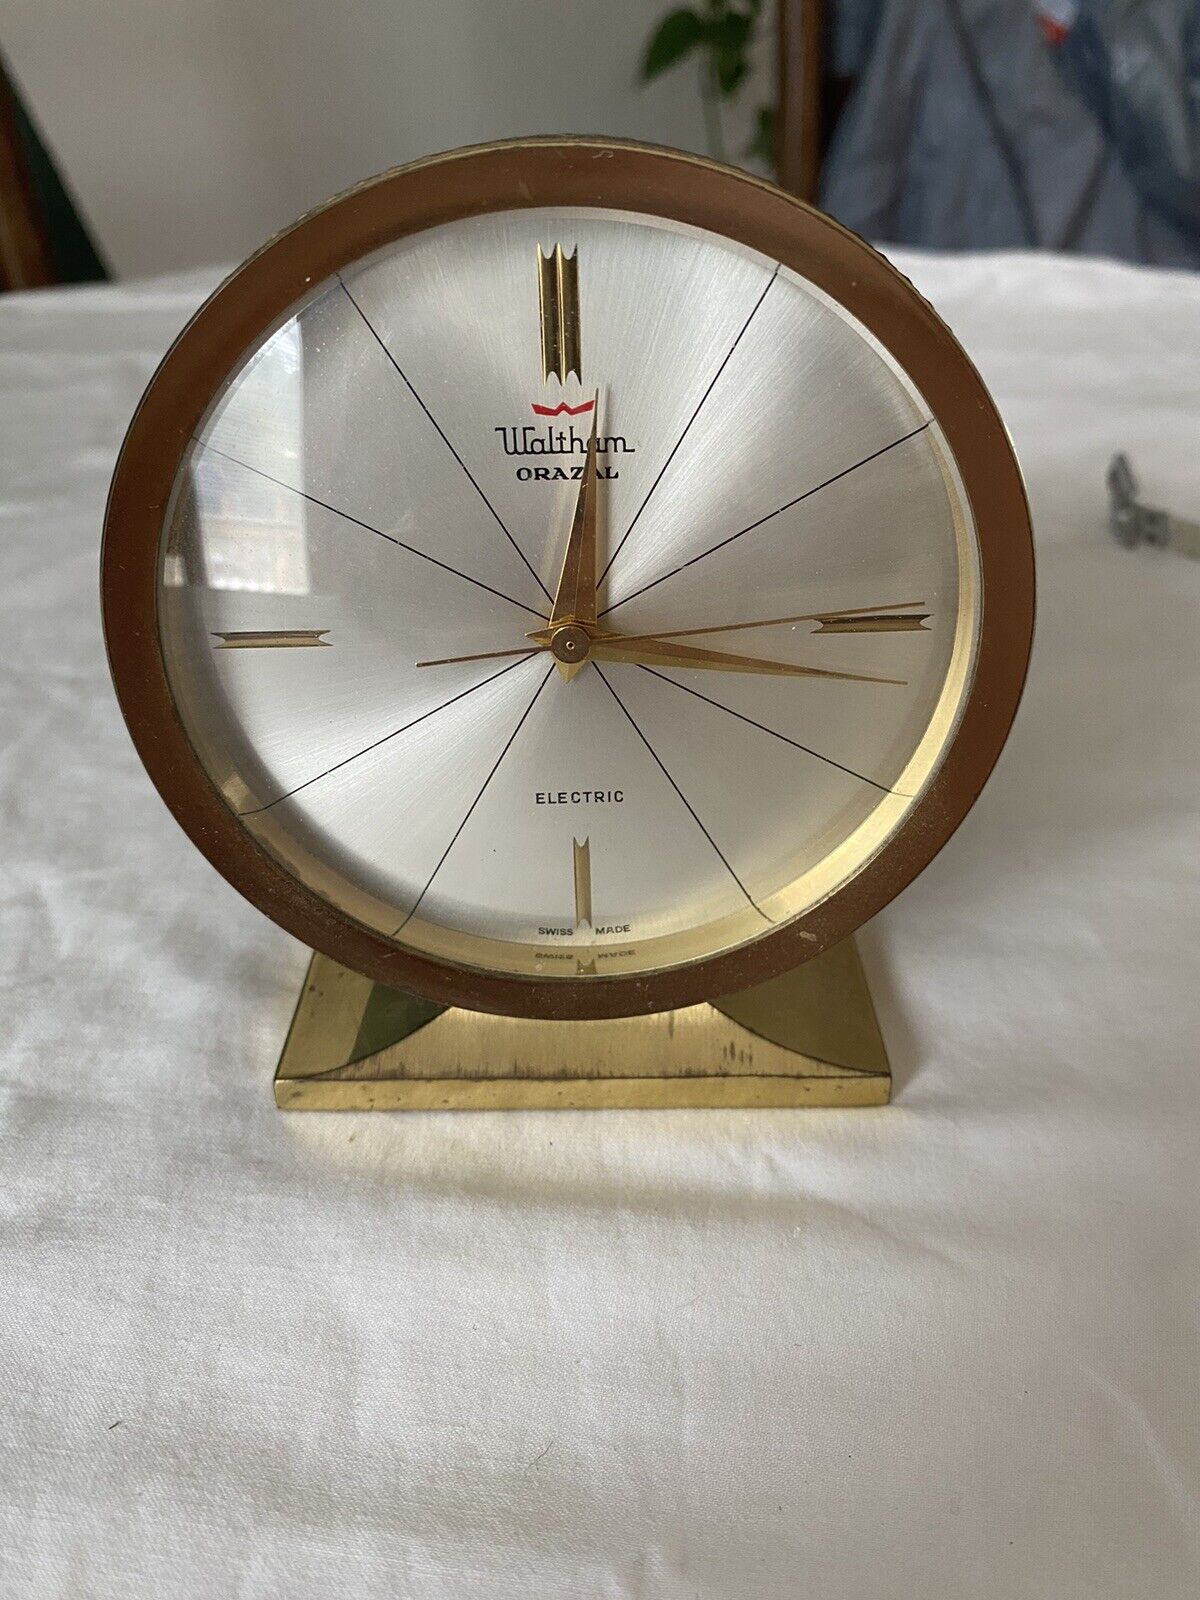 Vintage Waltham Orazal Electric Clock Made in Switzerland Tested & Working